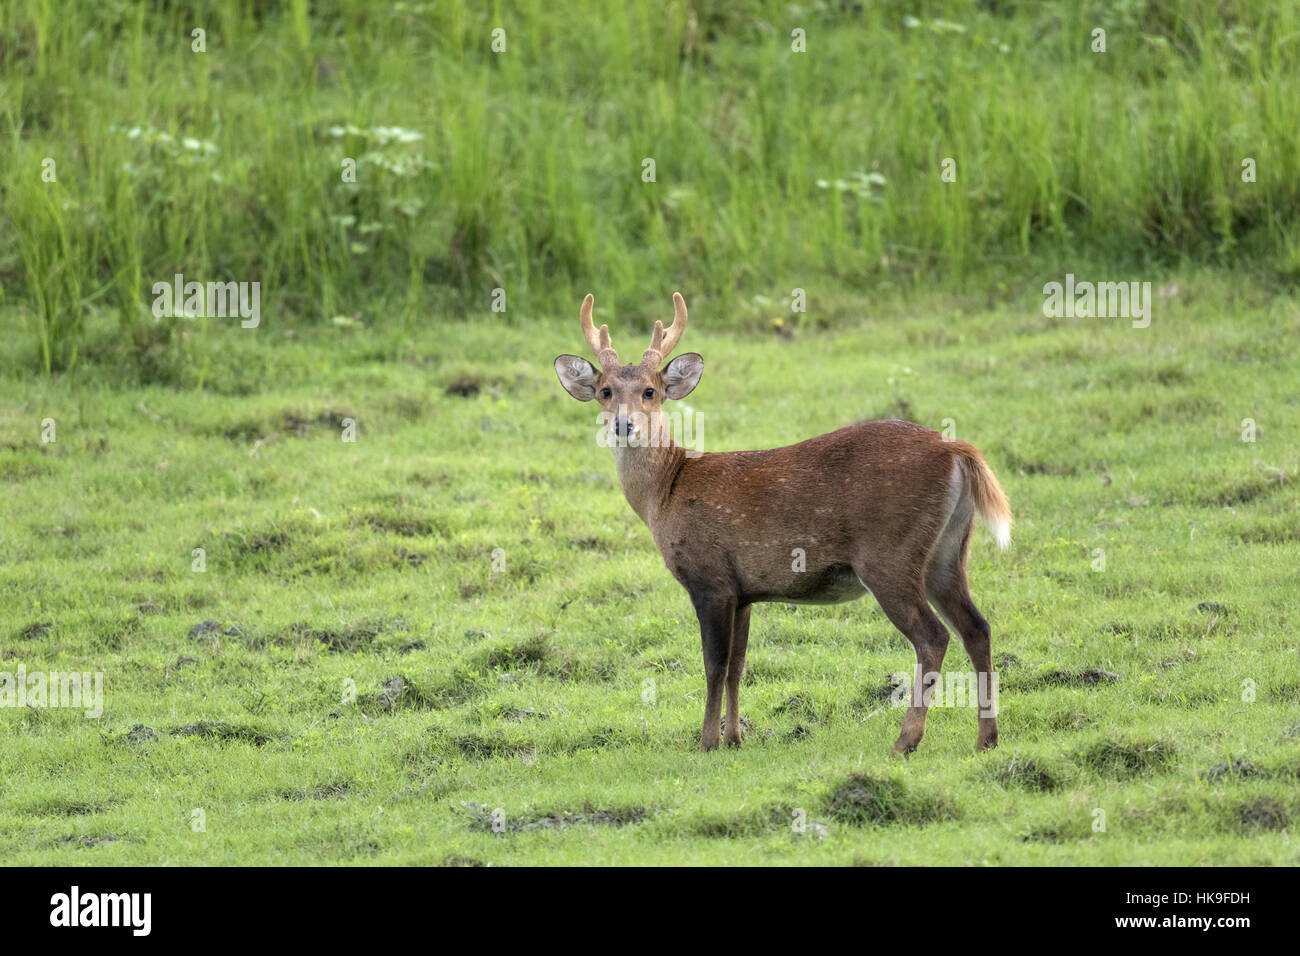 Hog deer (Axis porcinus), adult male standing in grassland, Kaziranga National Park, Assam, India, April Stock Photo